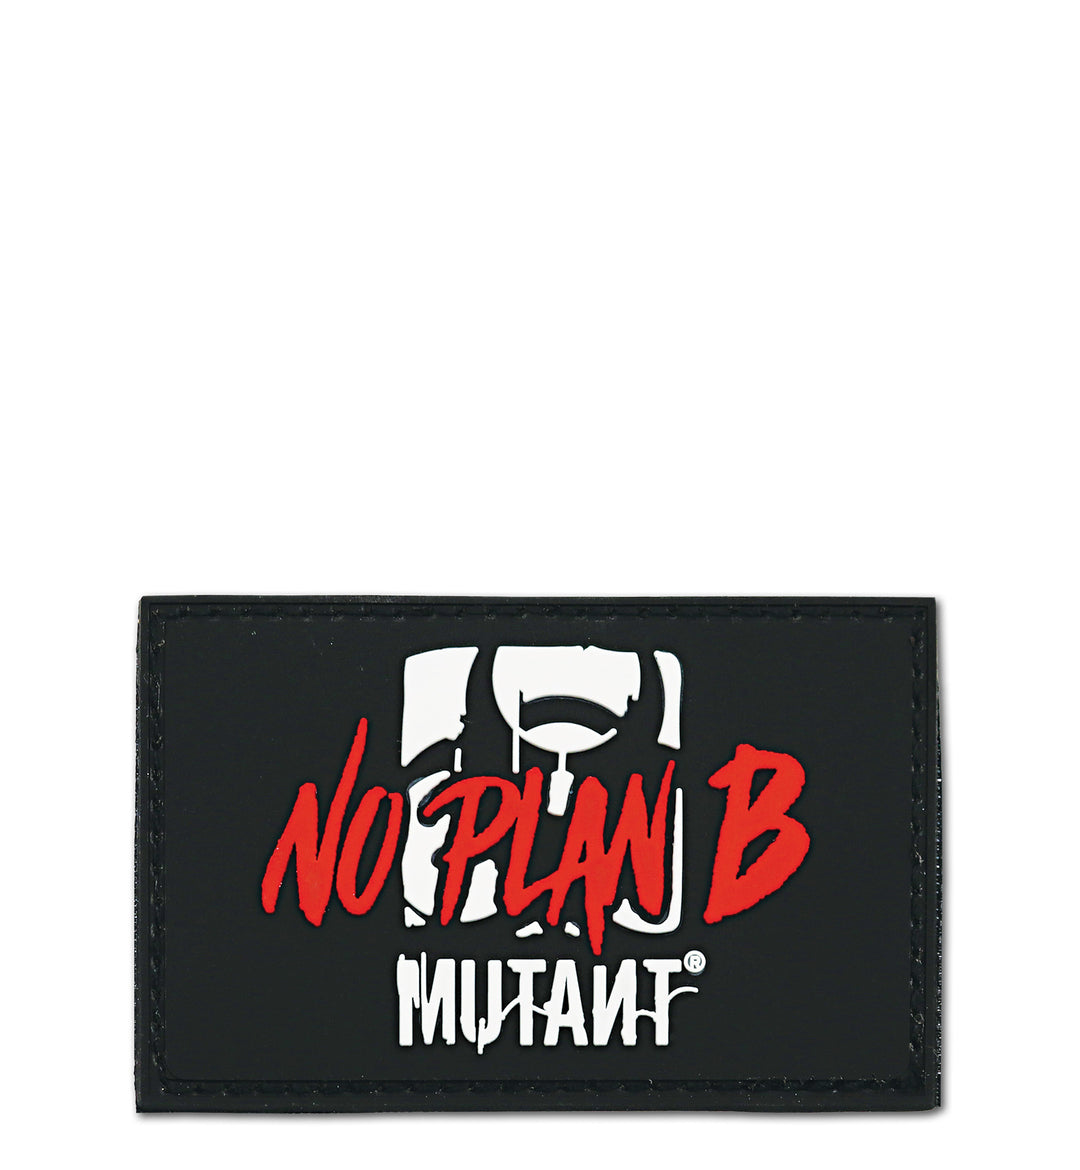 MUTANT® NO PLAN B Velcro Patch - Rep Shaun Clarida's Mantra! - MUTANT